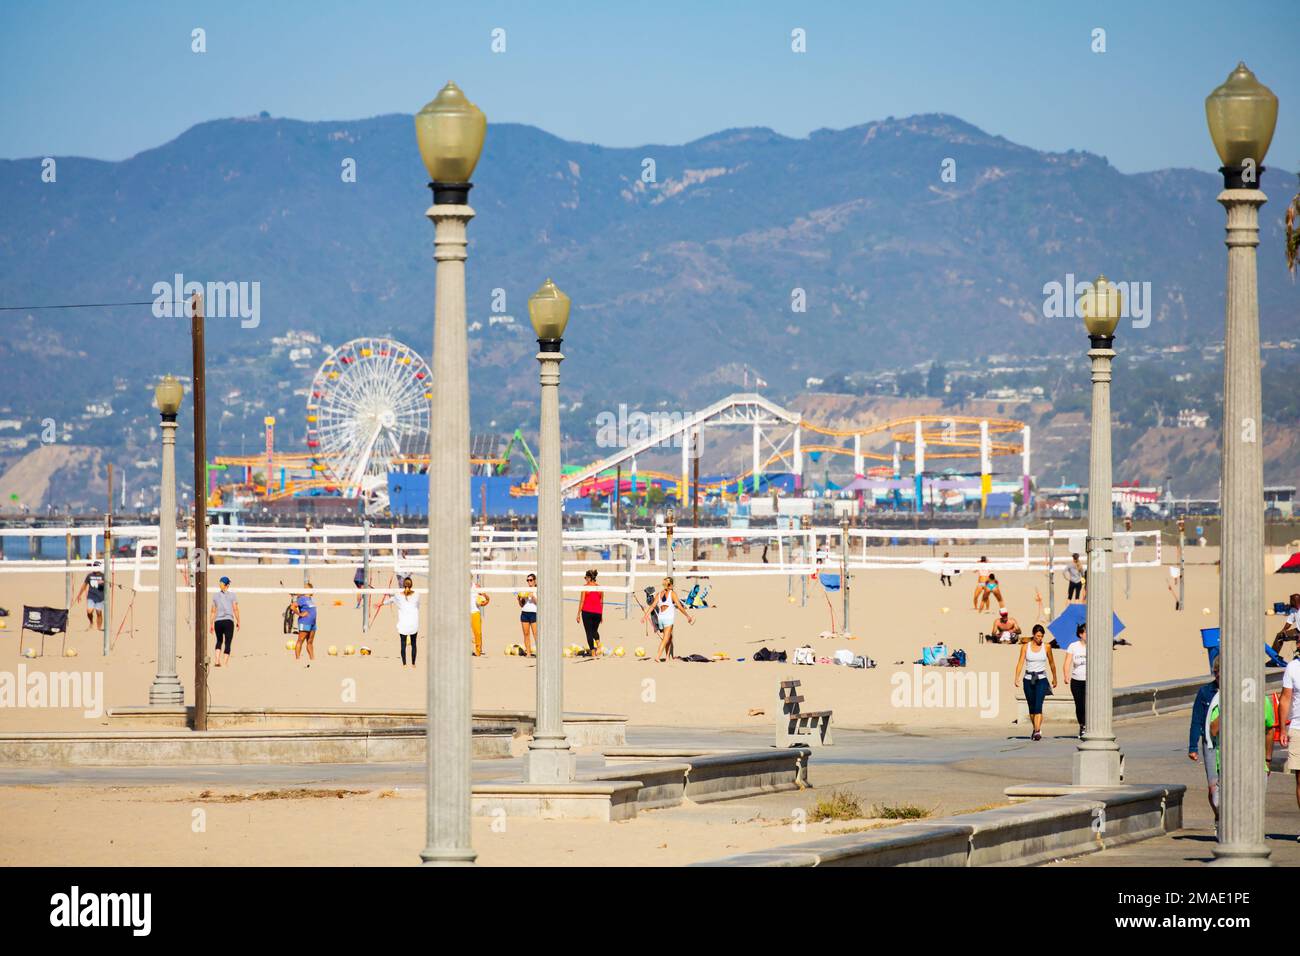 Playing volleyball on the beach, Santa Monica, California, USA Stock Photo